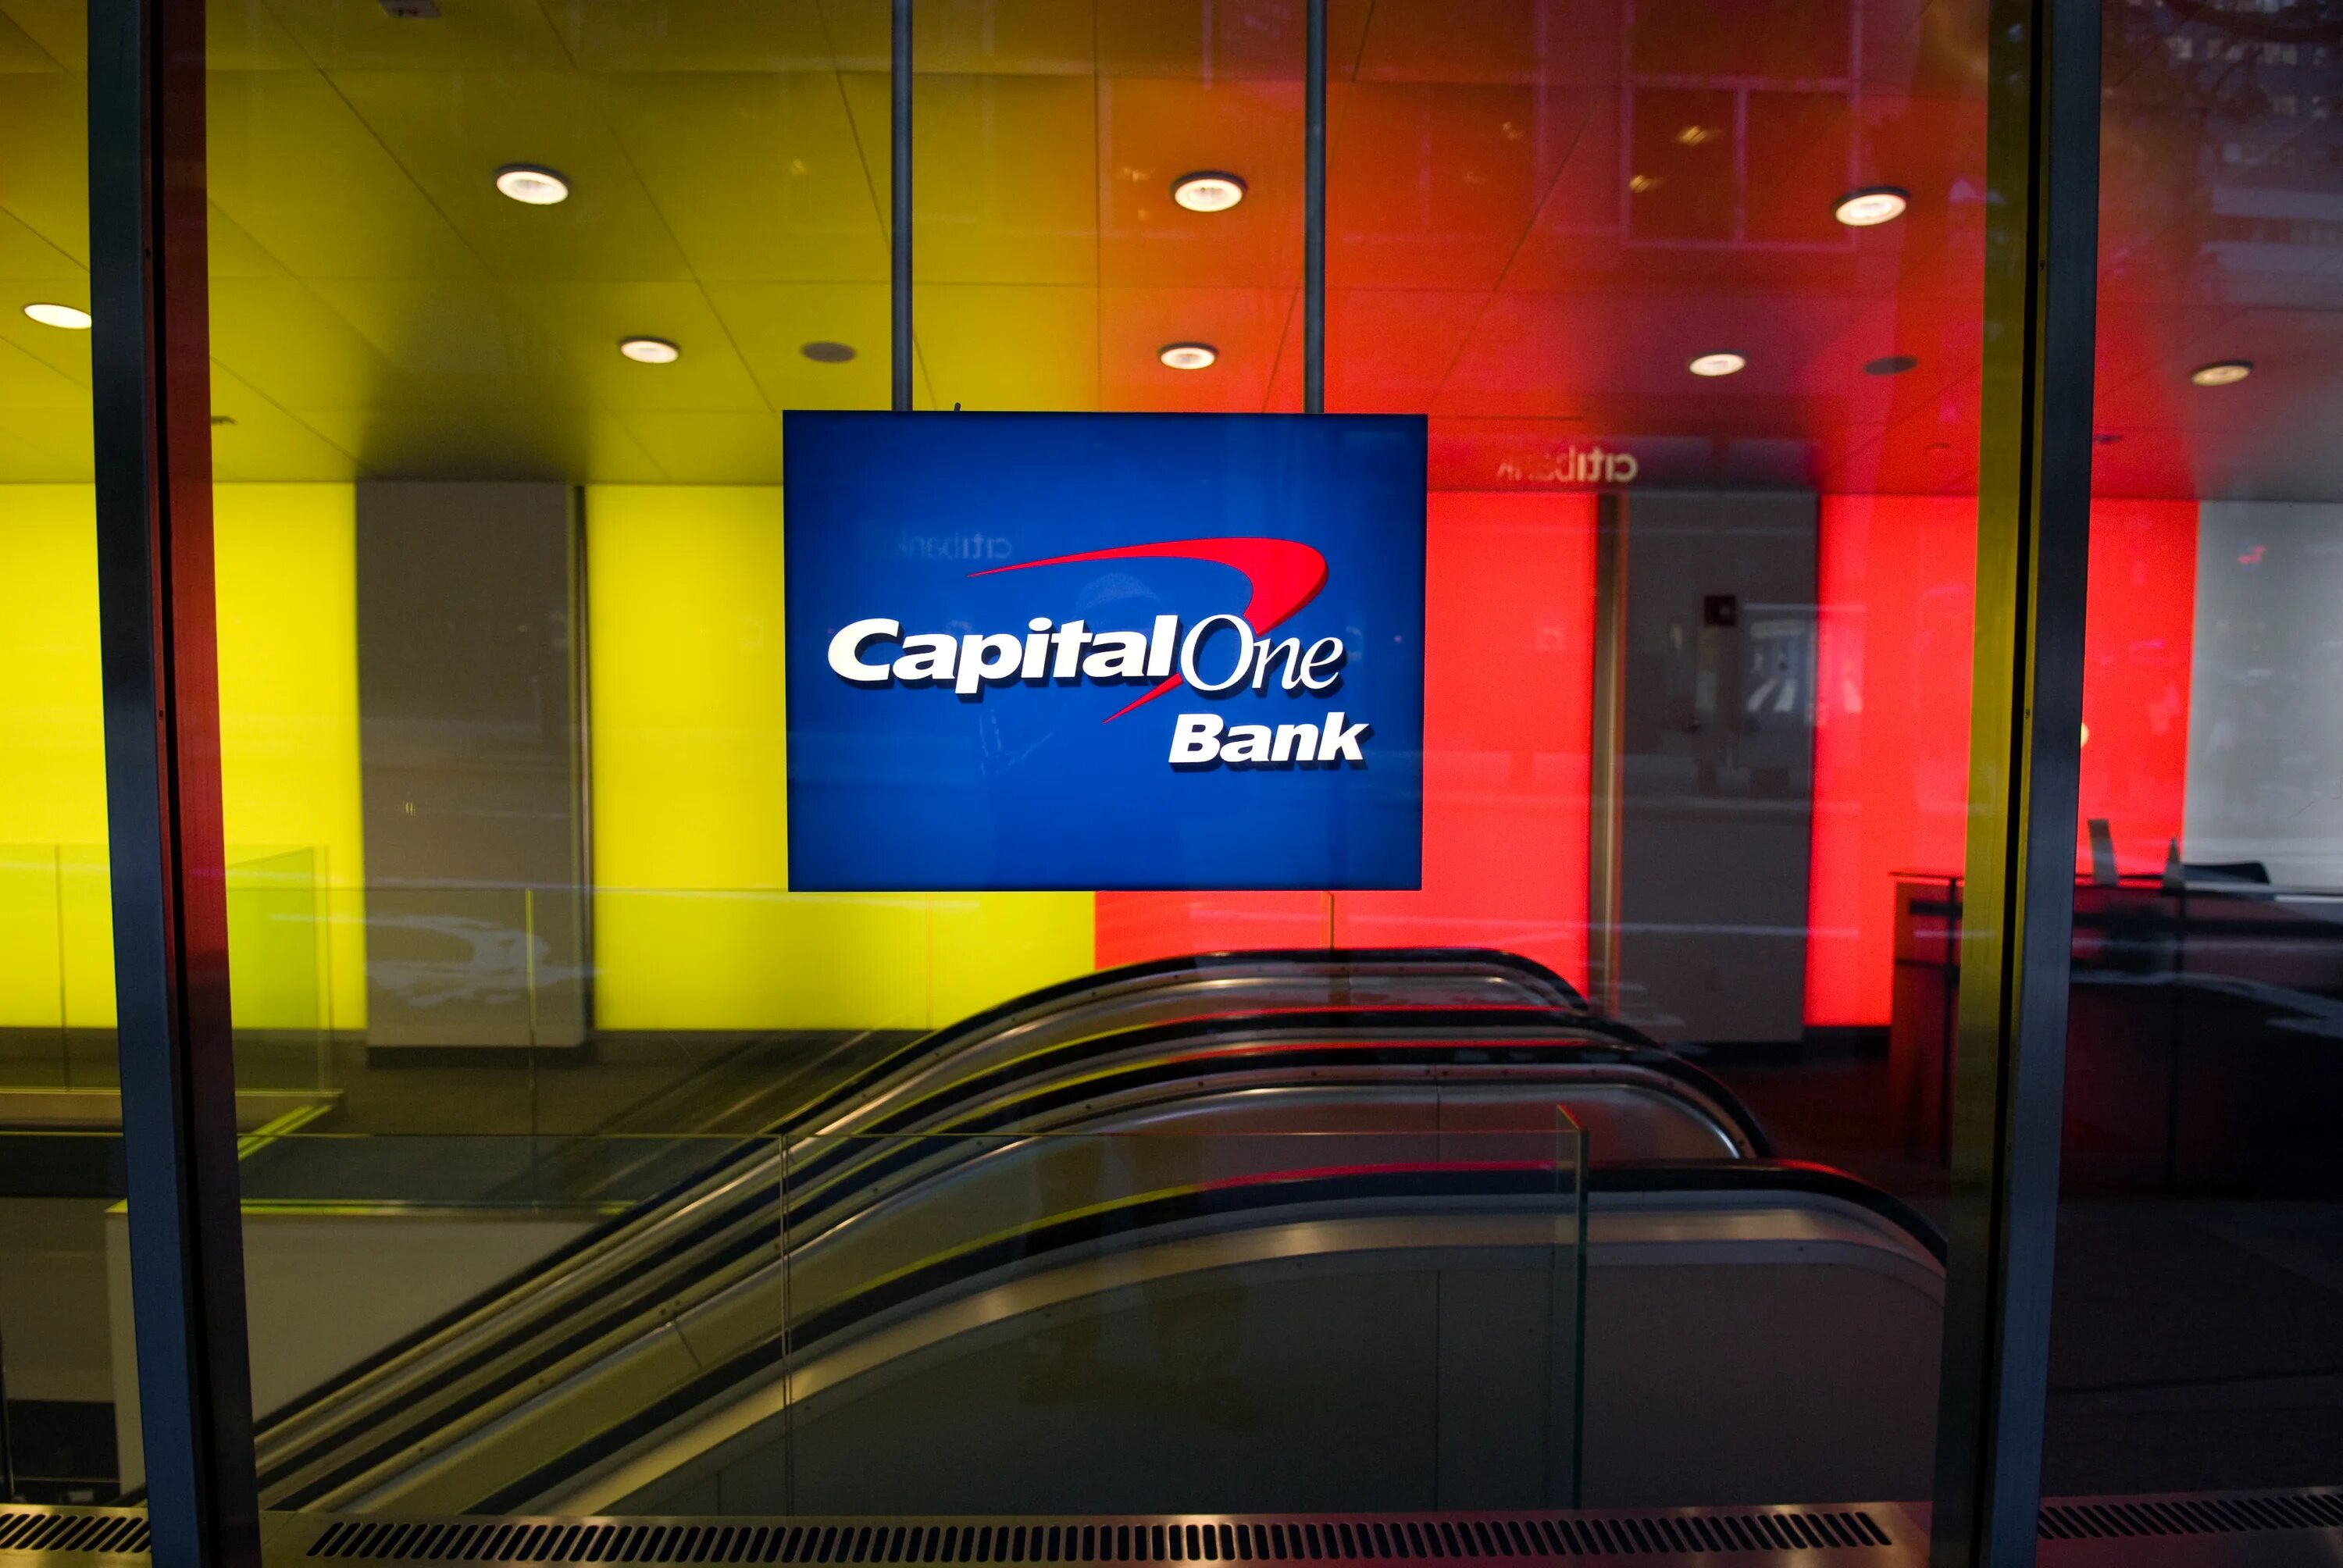 S one capital. Capital one. Capital one Bank. Компания Capital one.